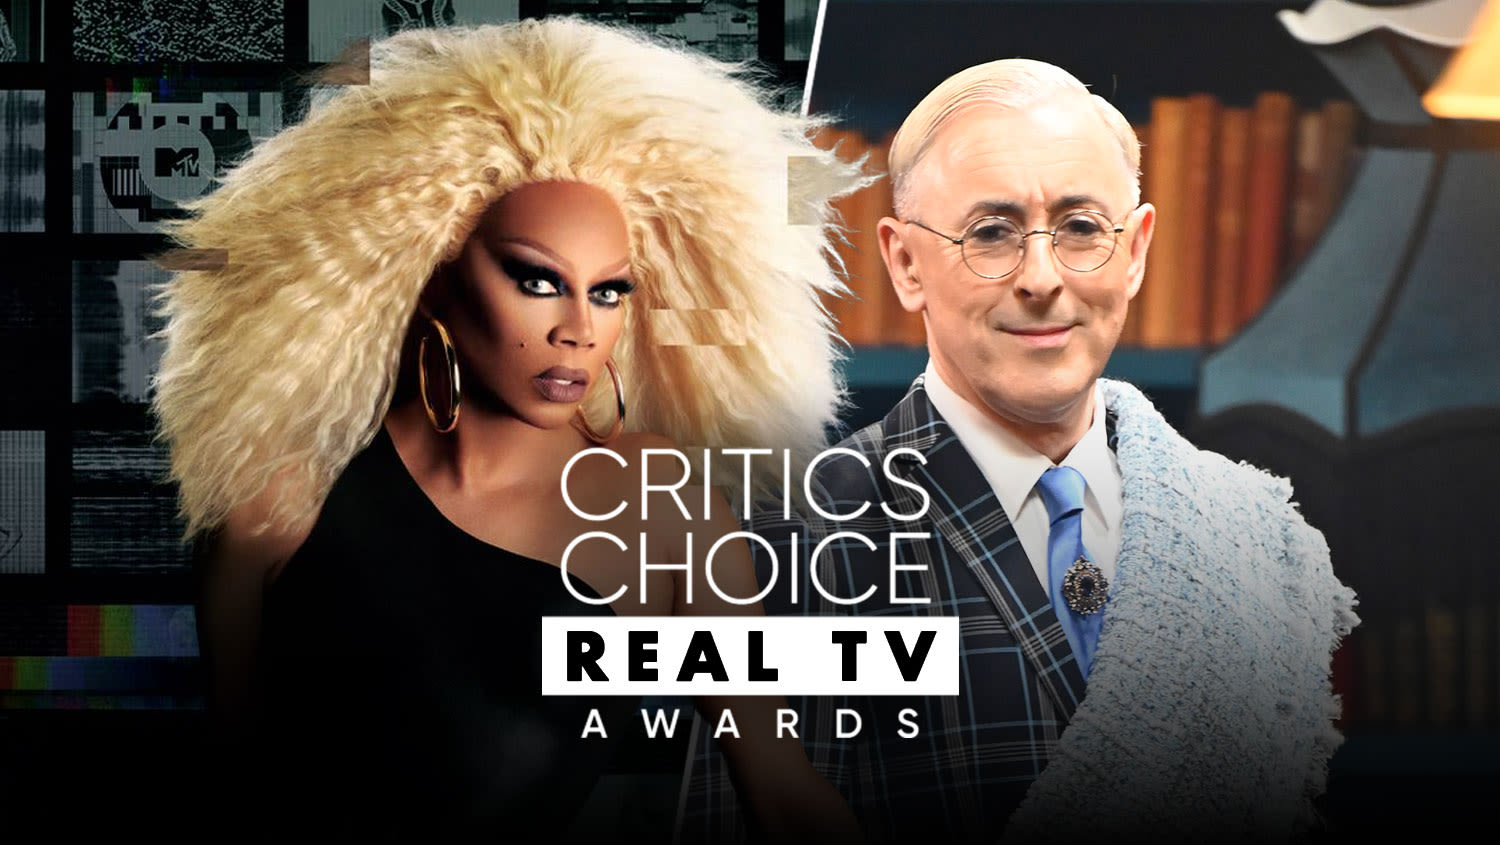 Critics Choice Real TV Awards Nominations List: ‘RuPaul’s Drag Race’ & ‘The Traitors’ Lead